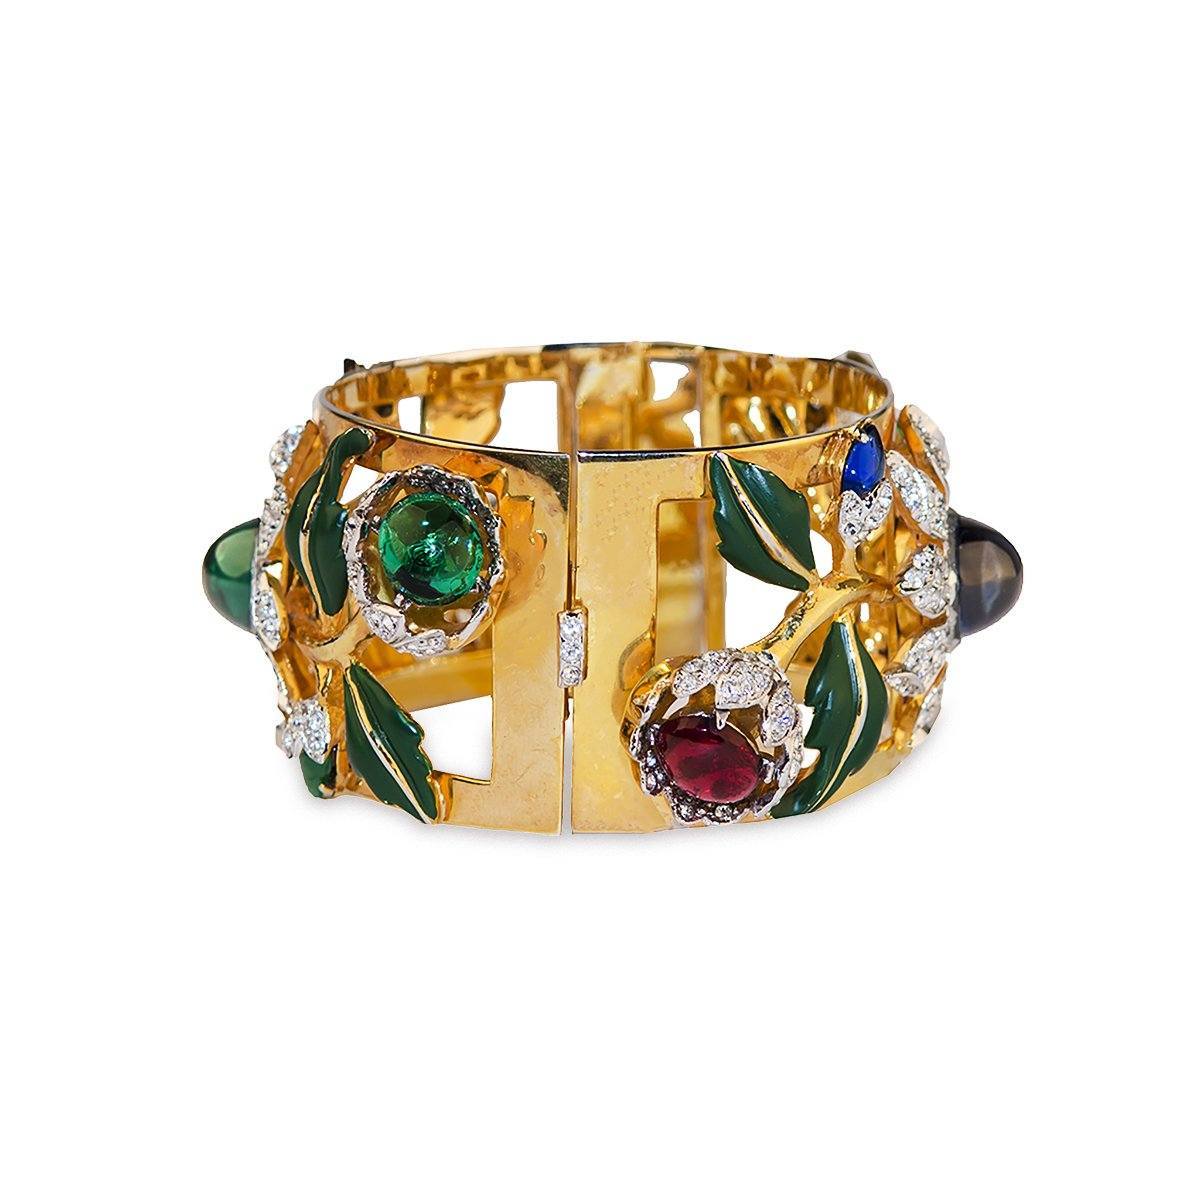 1939 Coro "Carmen Miranda" Rhinestone Gold-Plated Bracelet